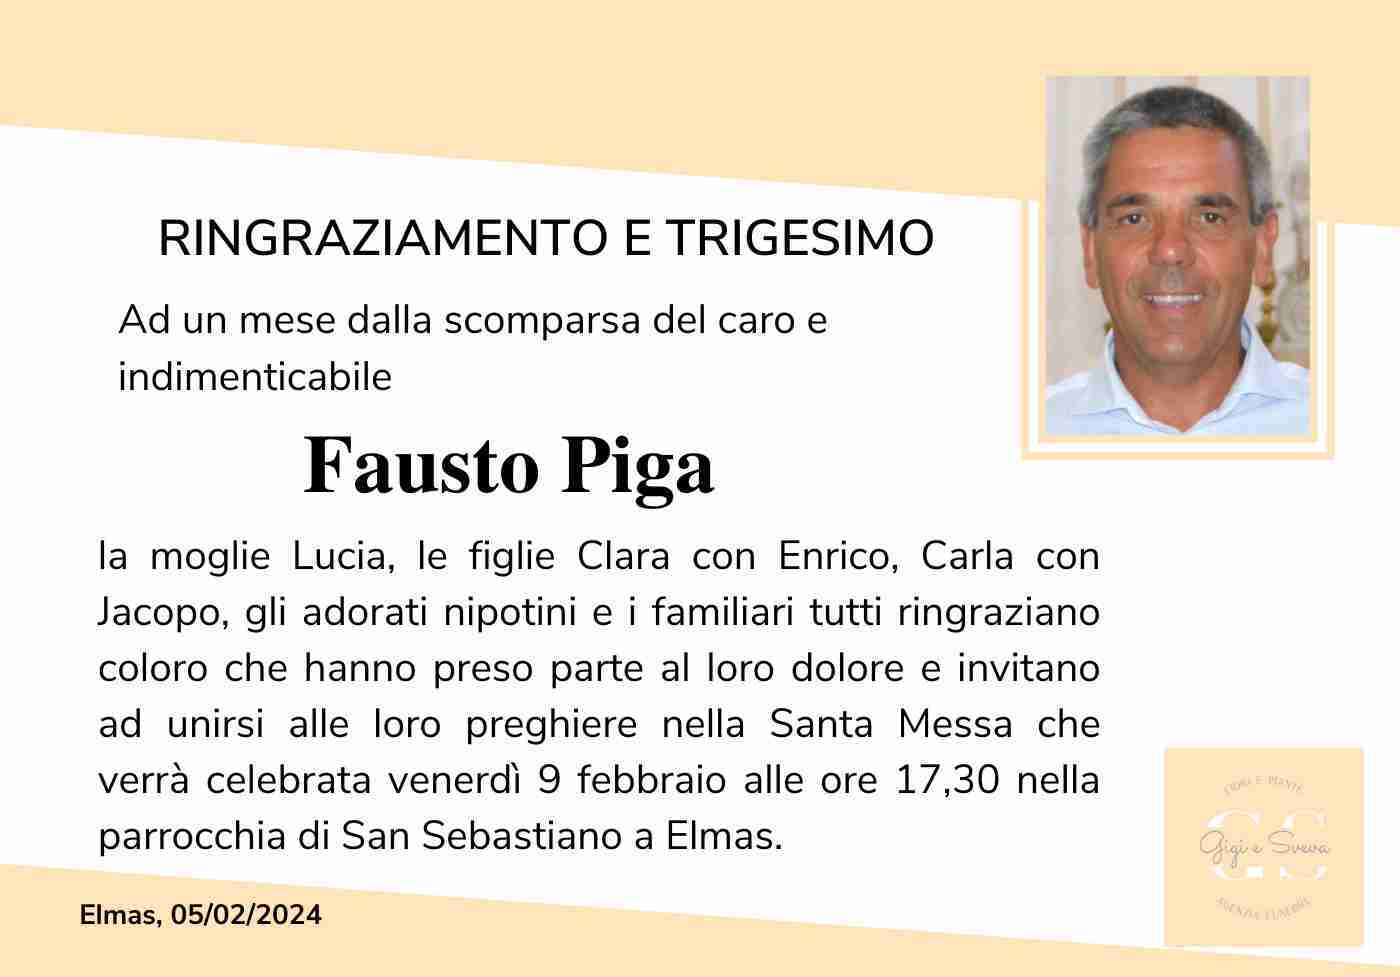 Fausto Piga